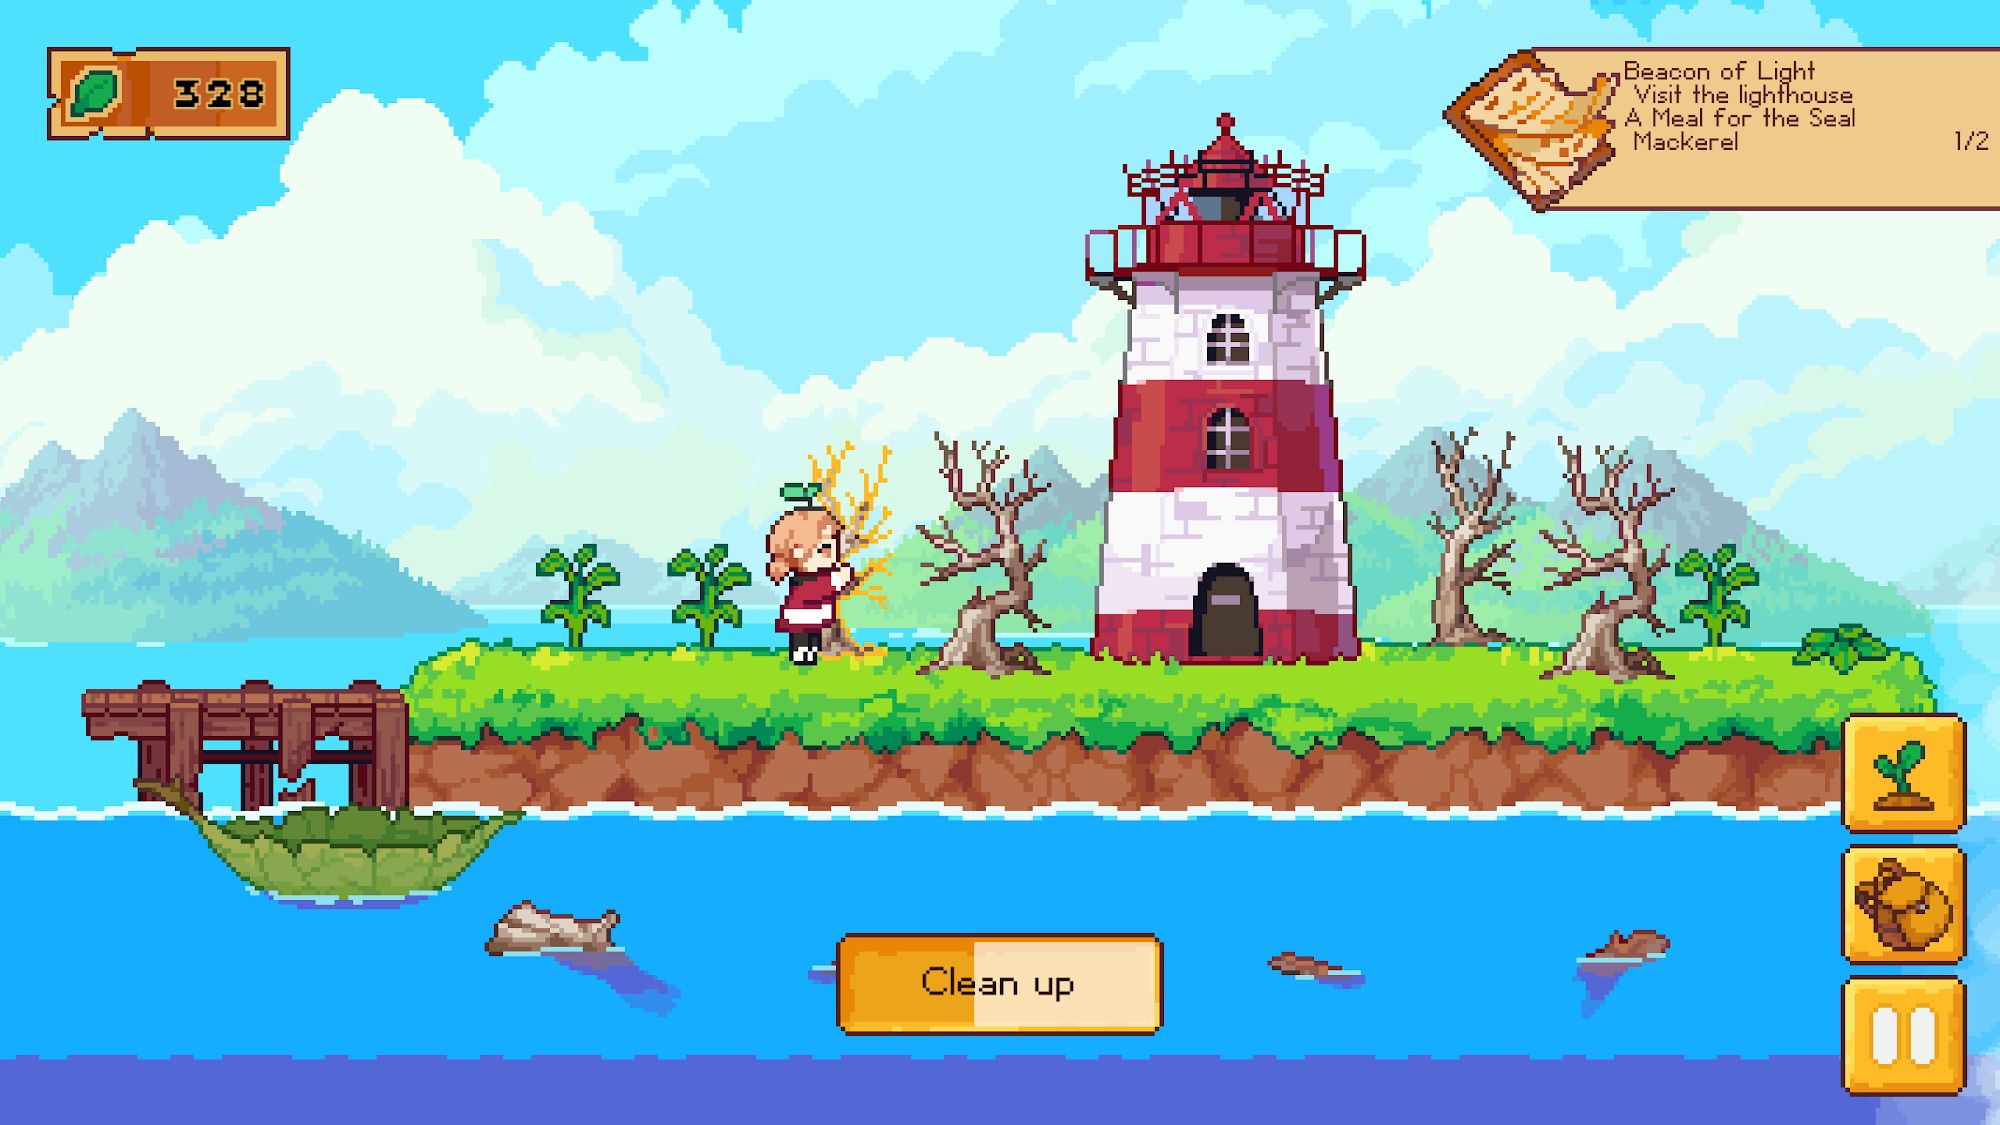 Descargar Luna's Fishing Garden gratis para Android.